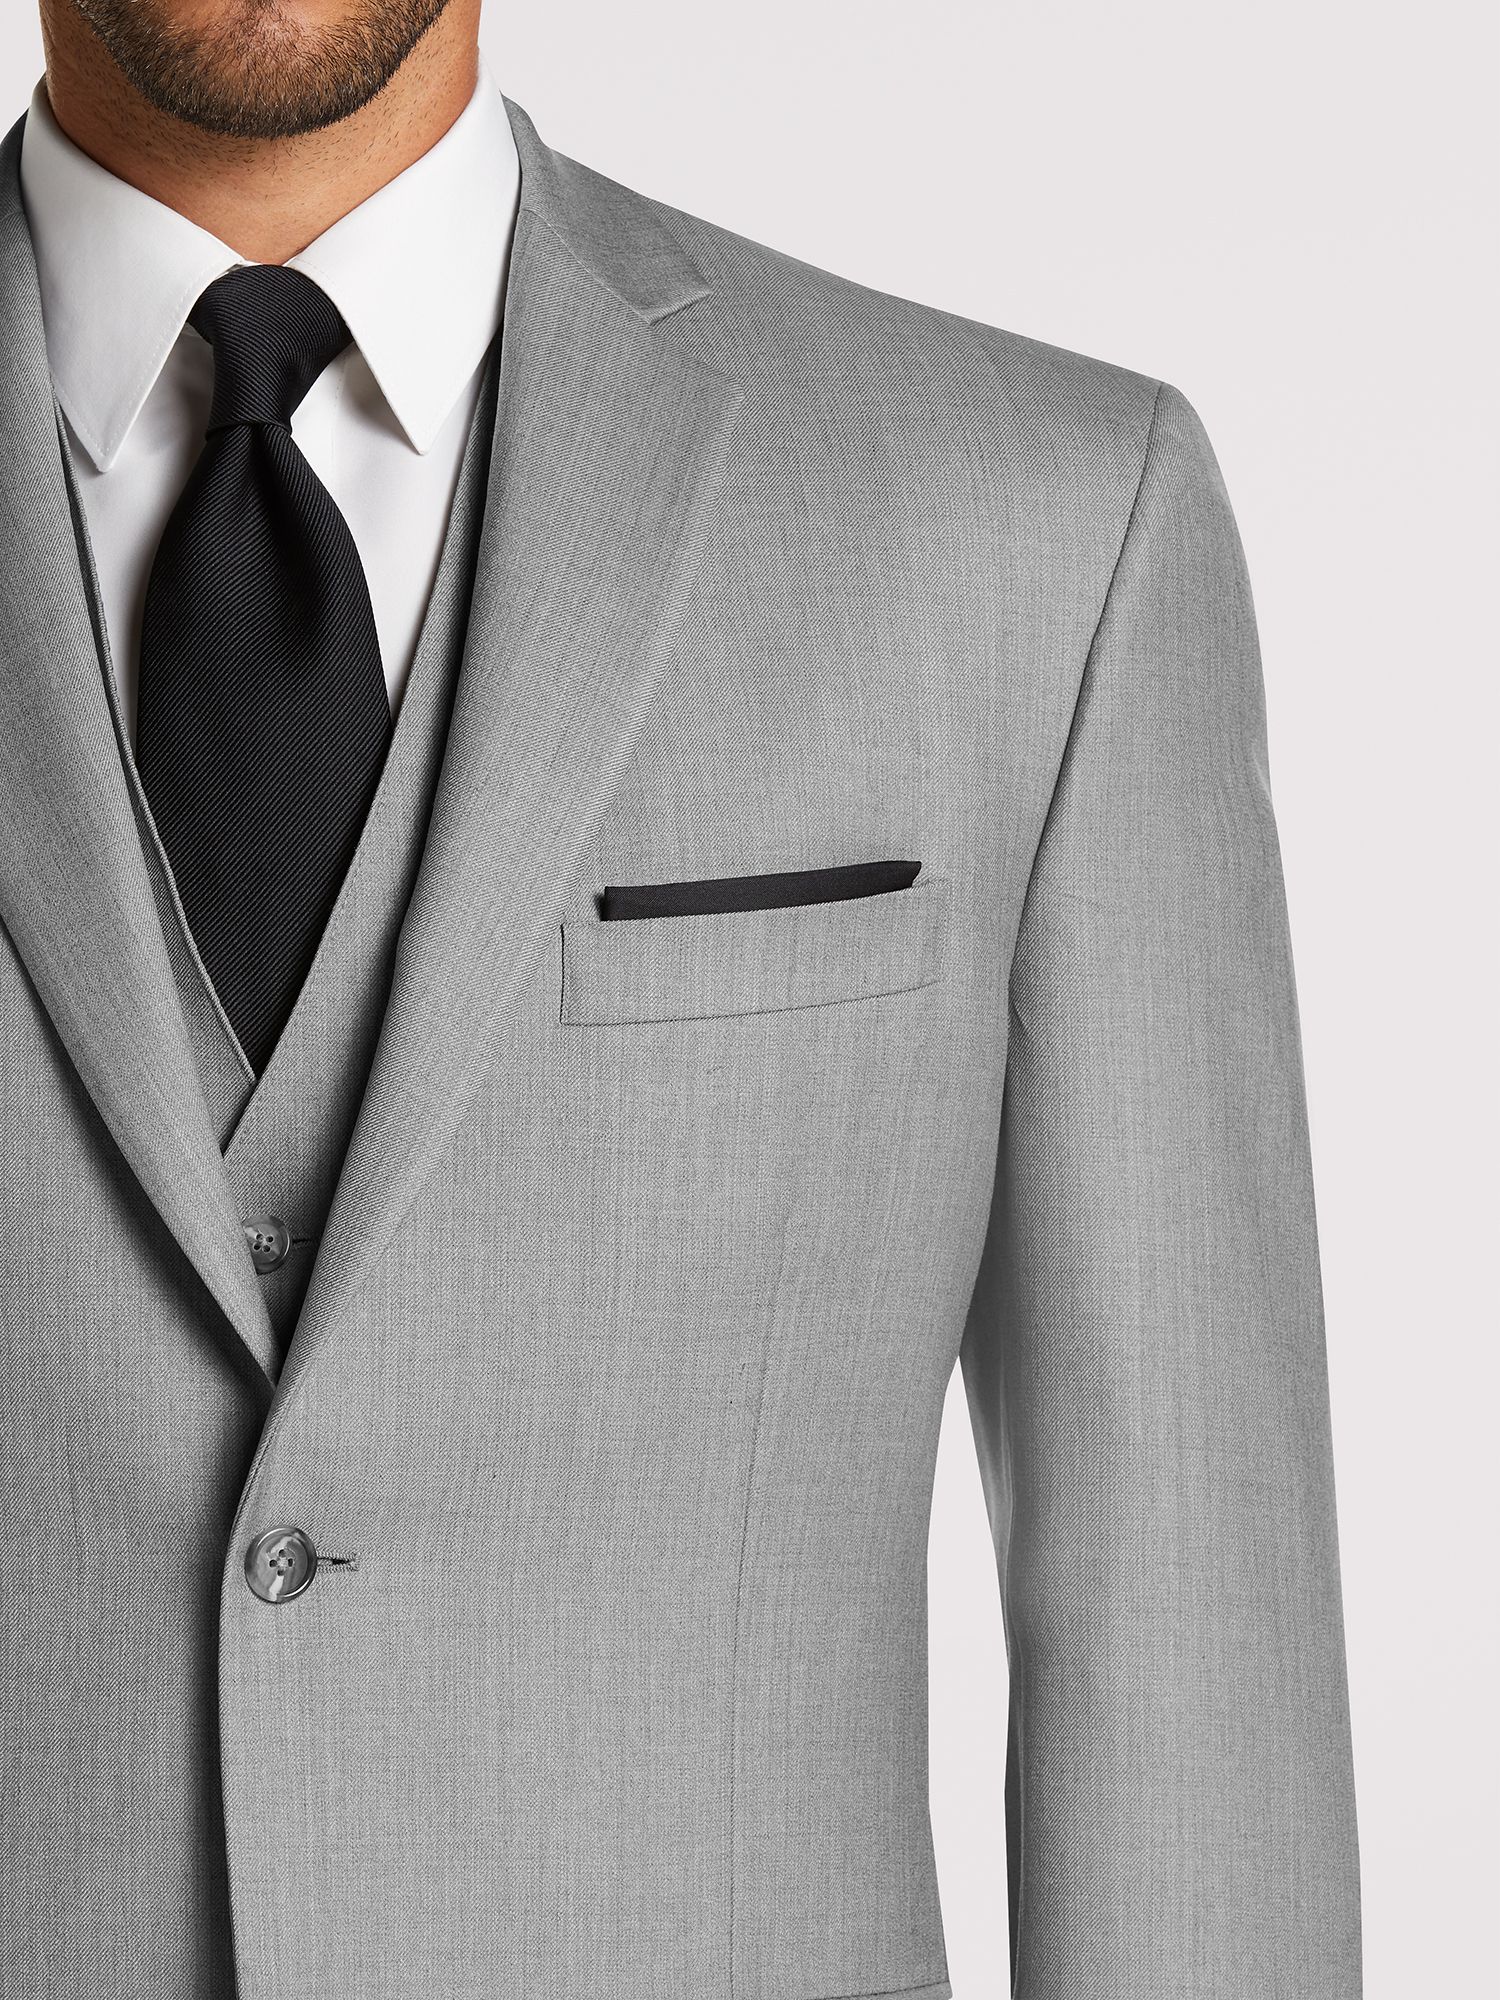 Vintage Men's Grey Suit by Pronto Uomo | Suit Rental | Moores Clothing